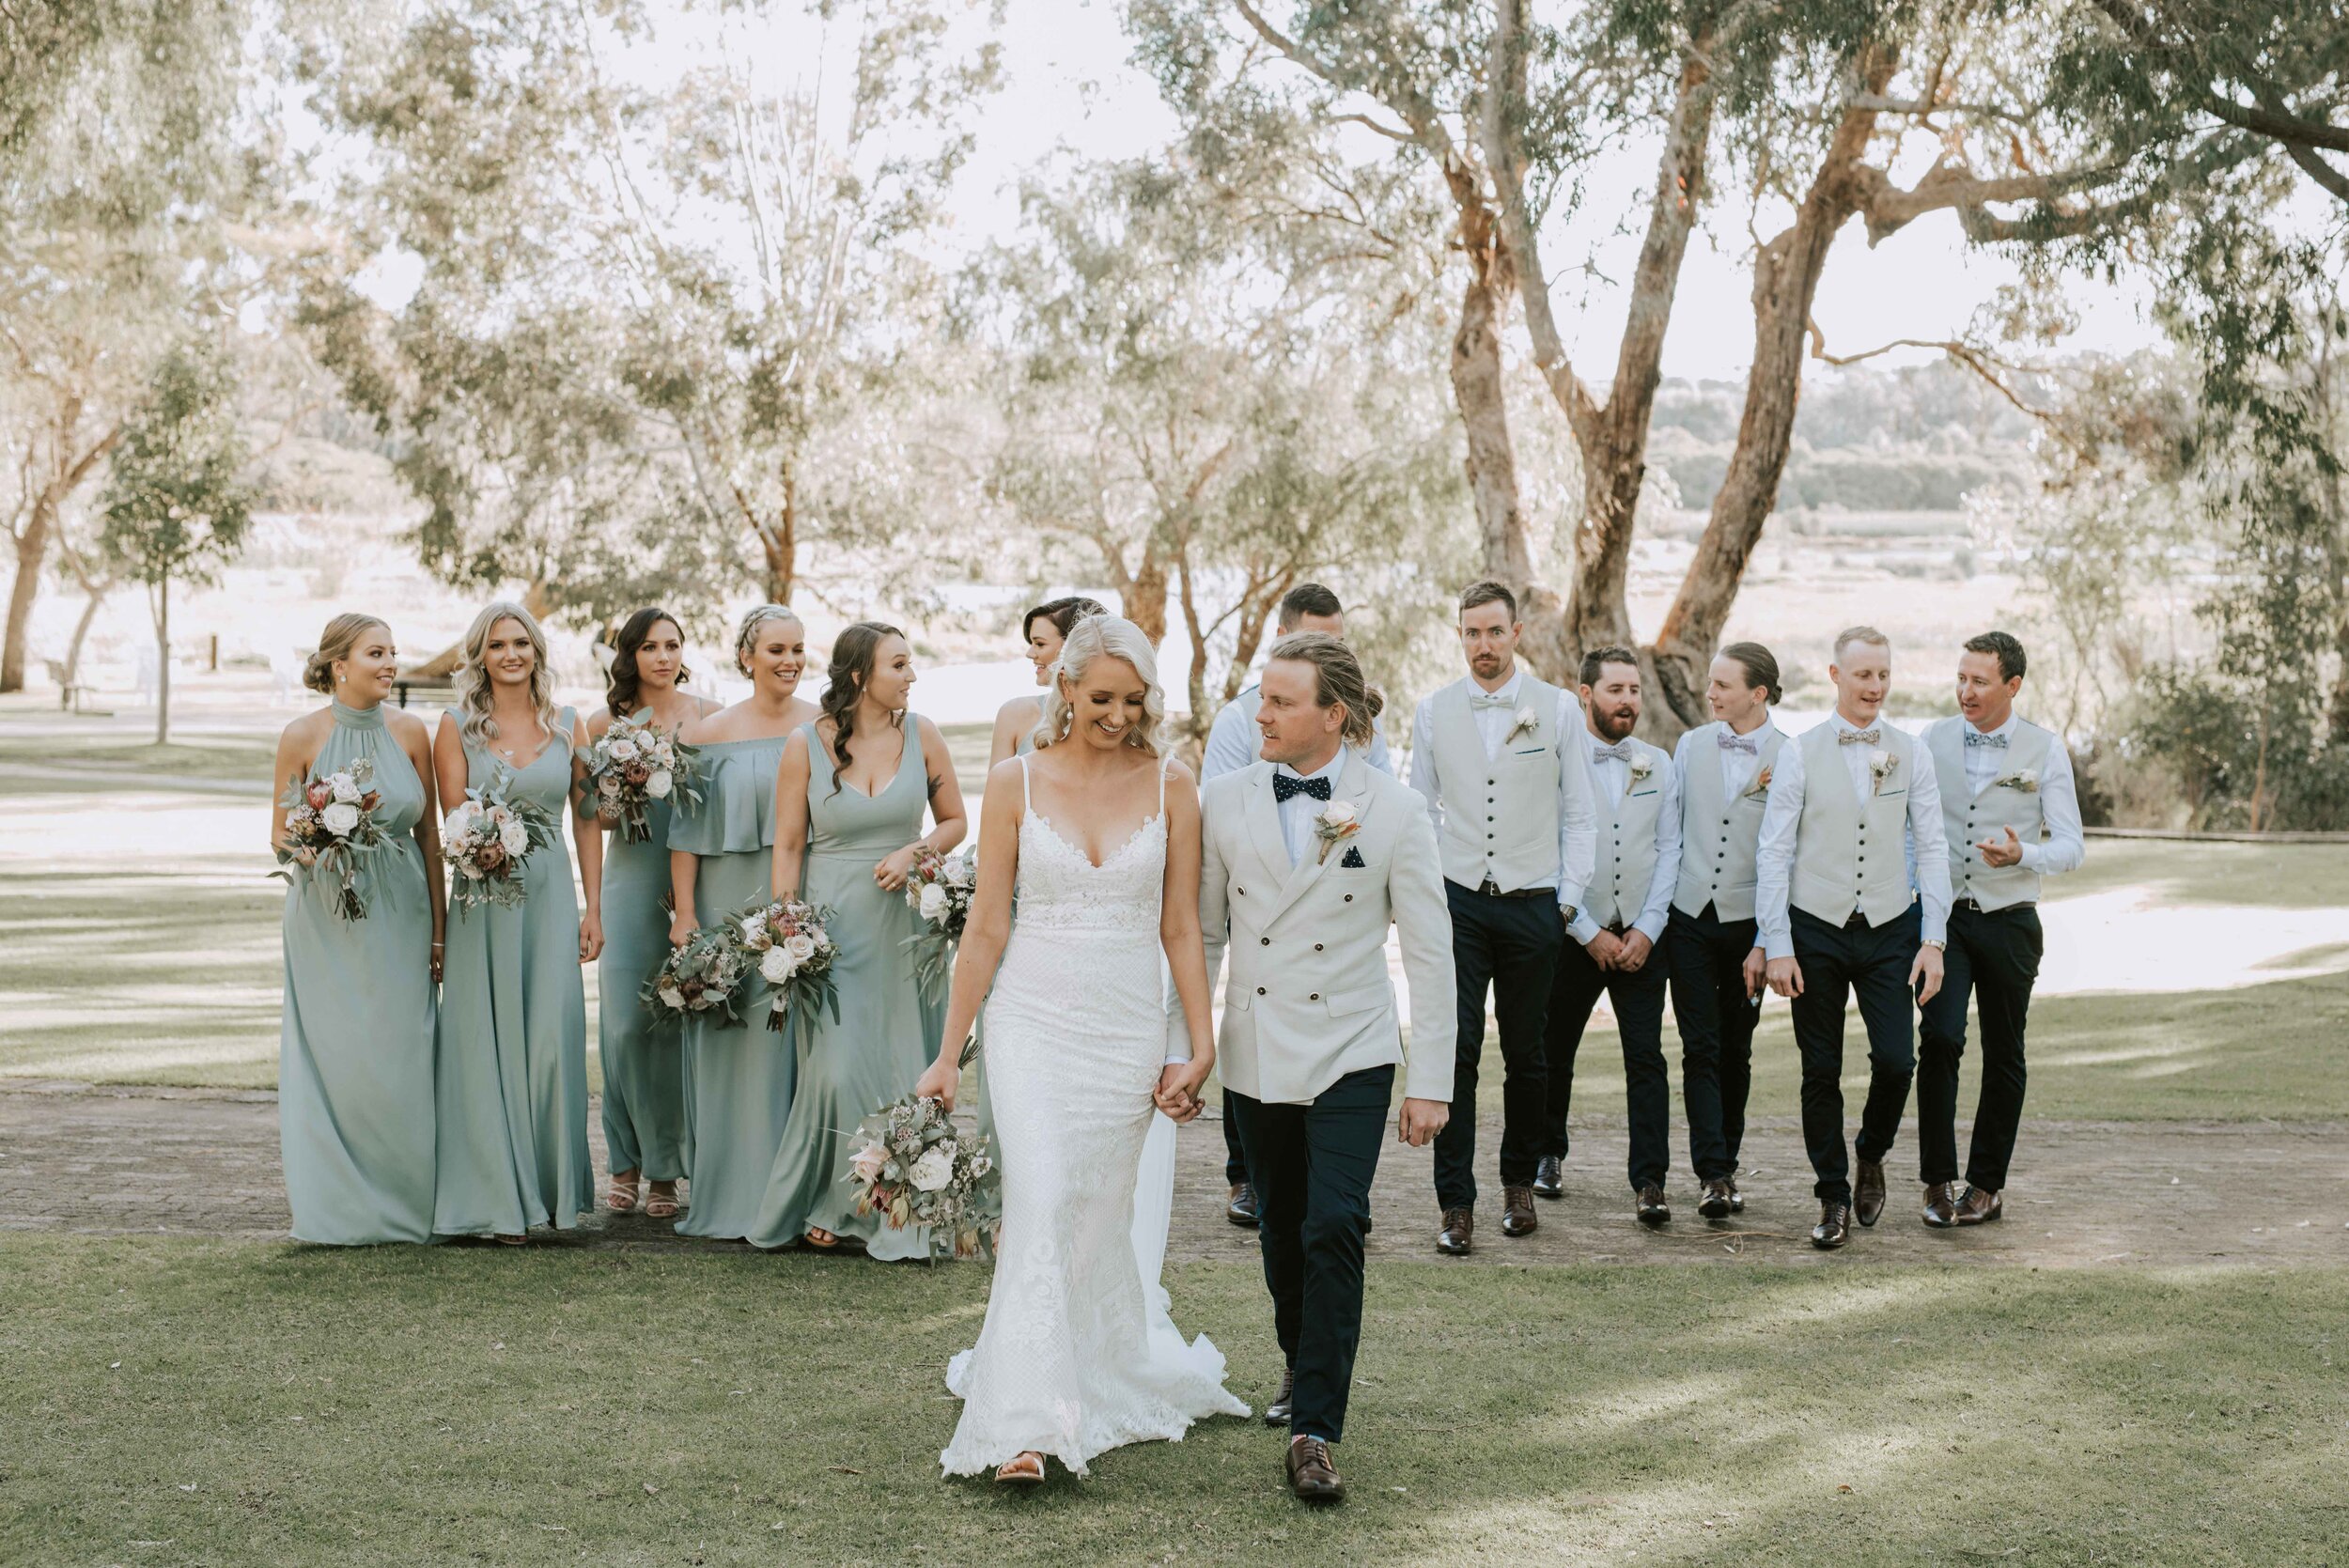 Yanchep park beautiful spring wedding | Perth wedding photographer Amy Skinner-601.jpg